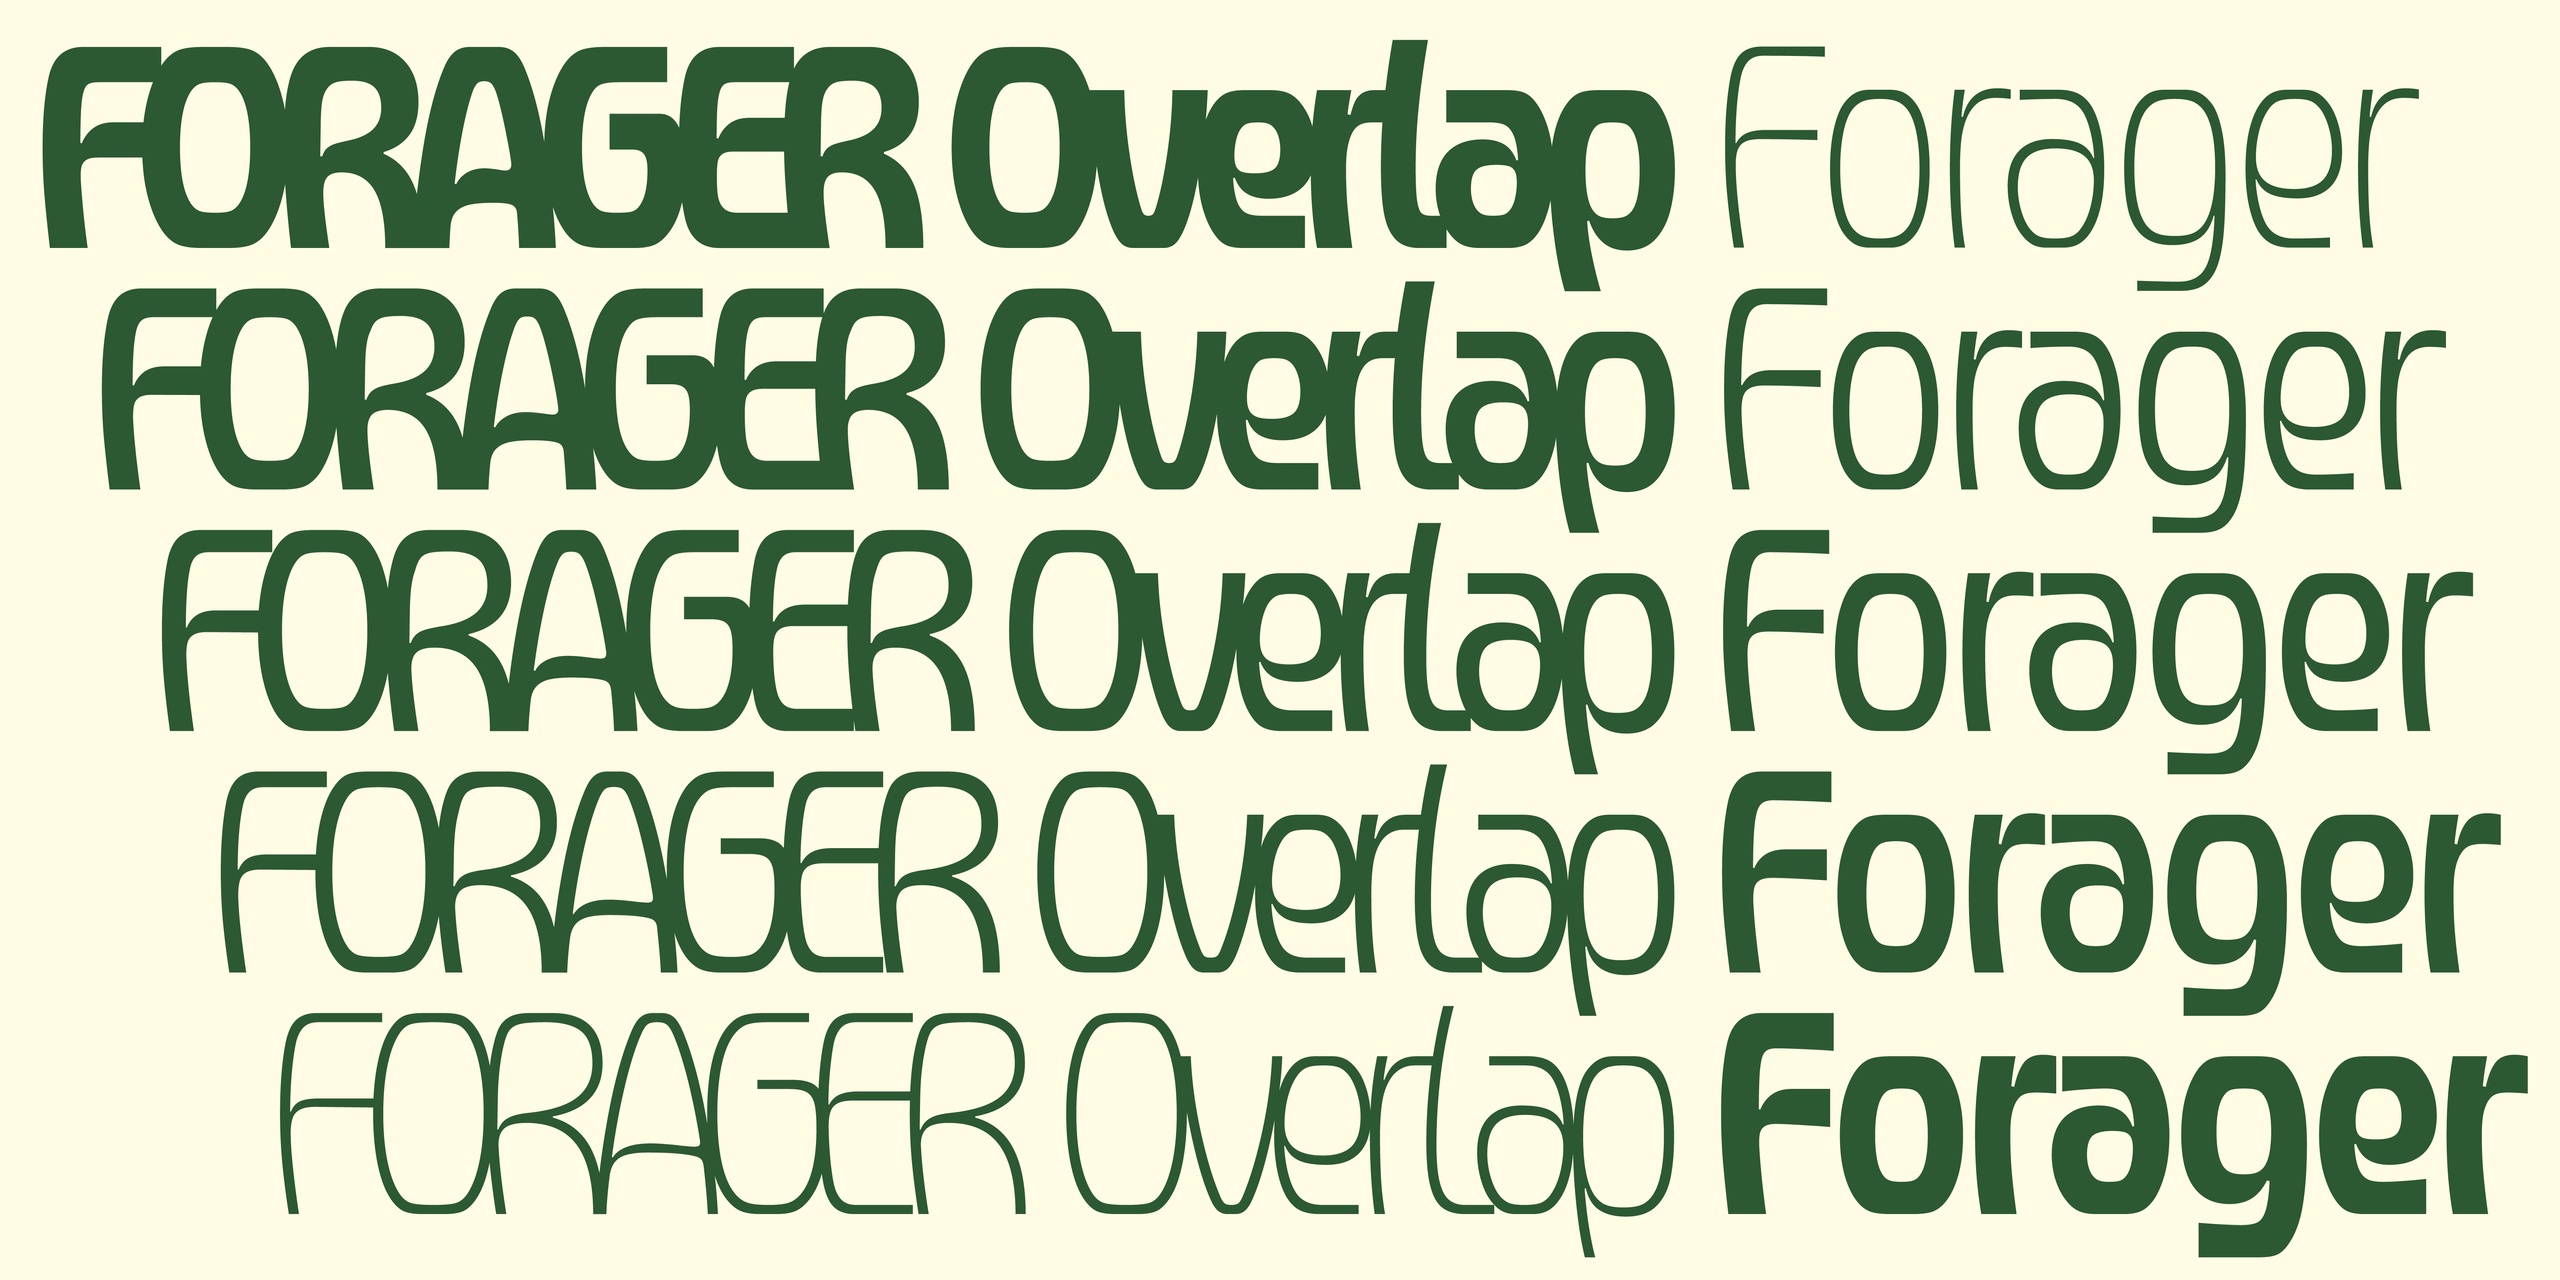 Пример шрифта Forager Regular